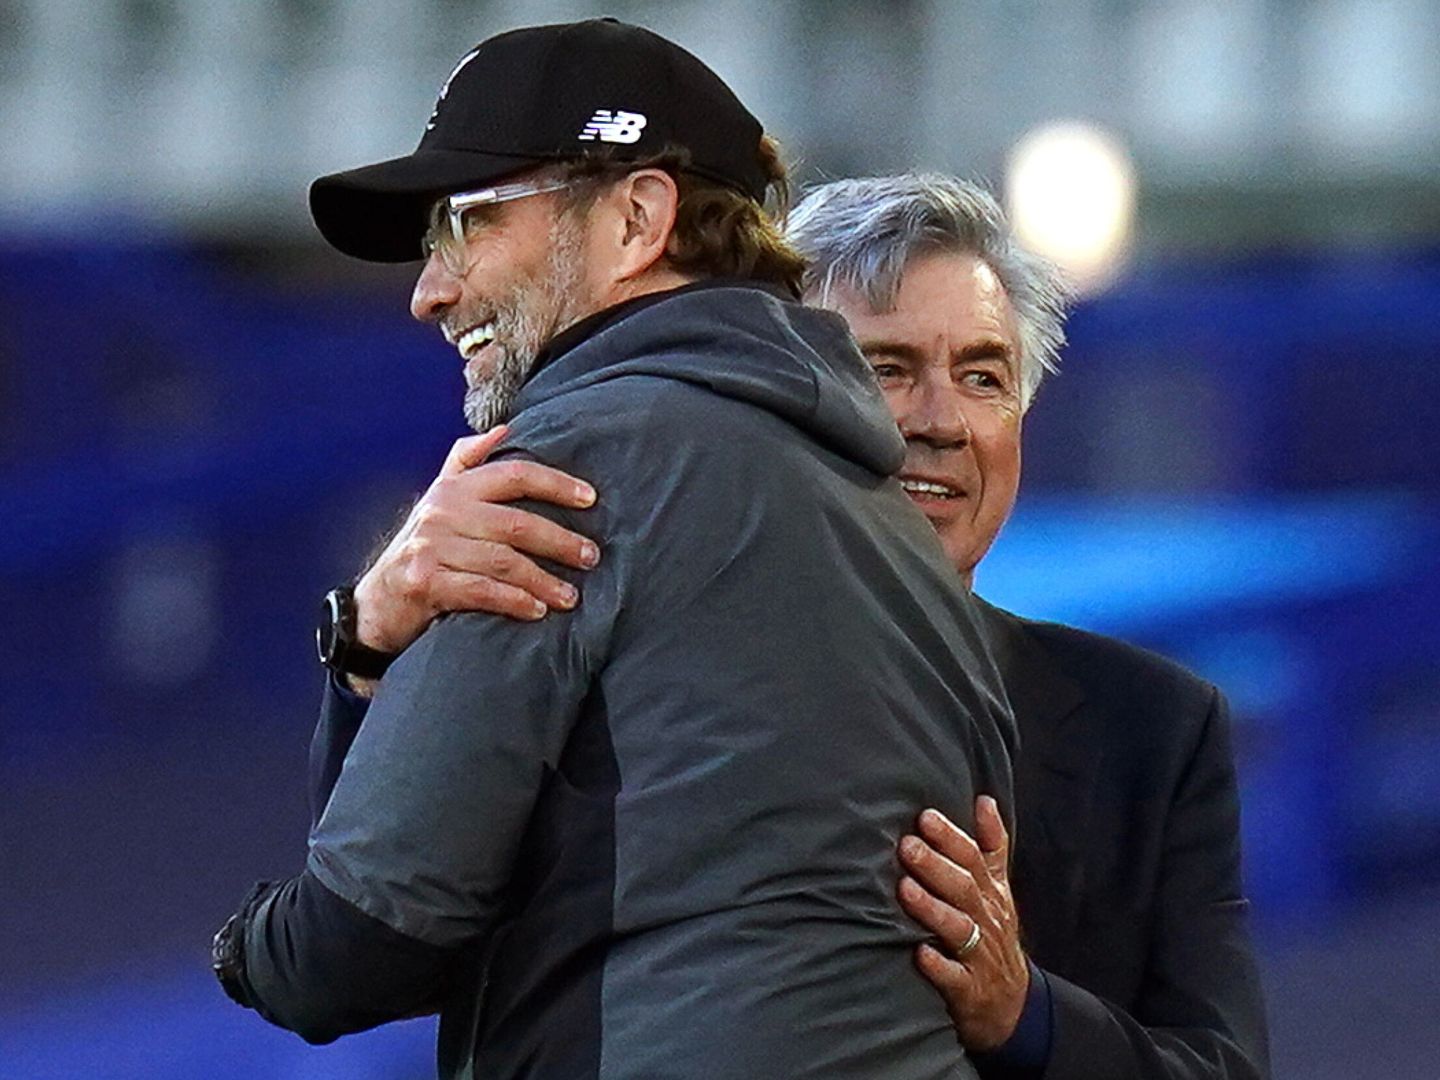 Jürgen Klopp y Carlo Ancelotti se abrazan tras un partido